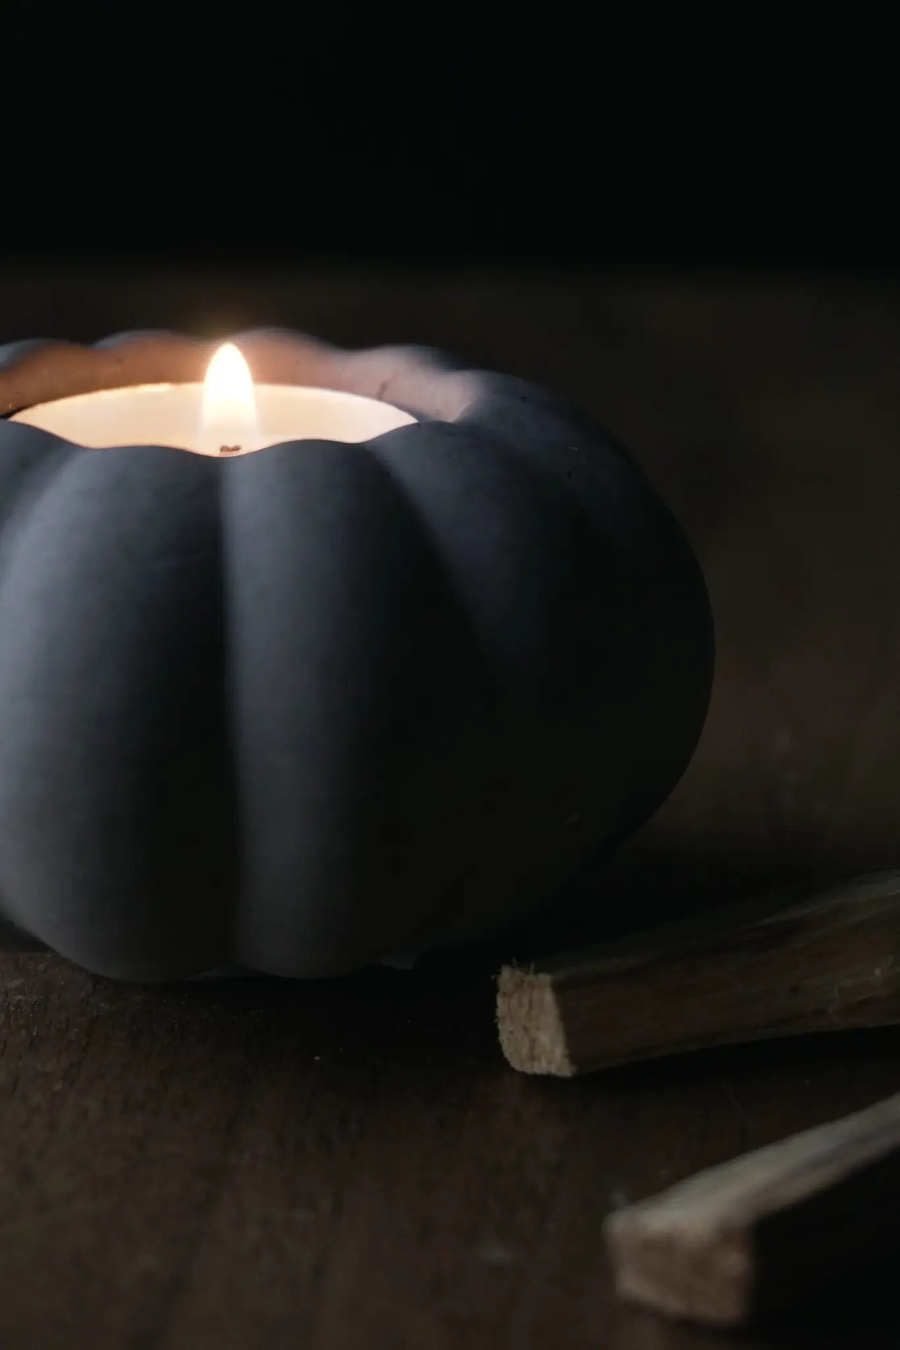 concrete pumpkin tealight candle holder